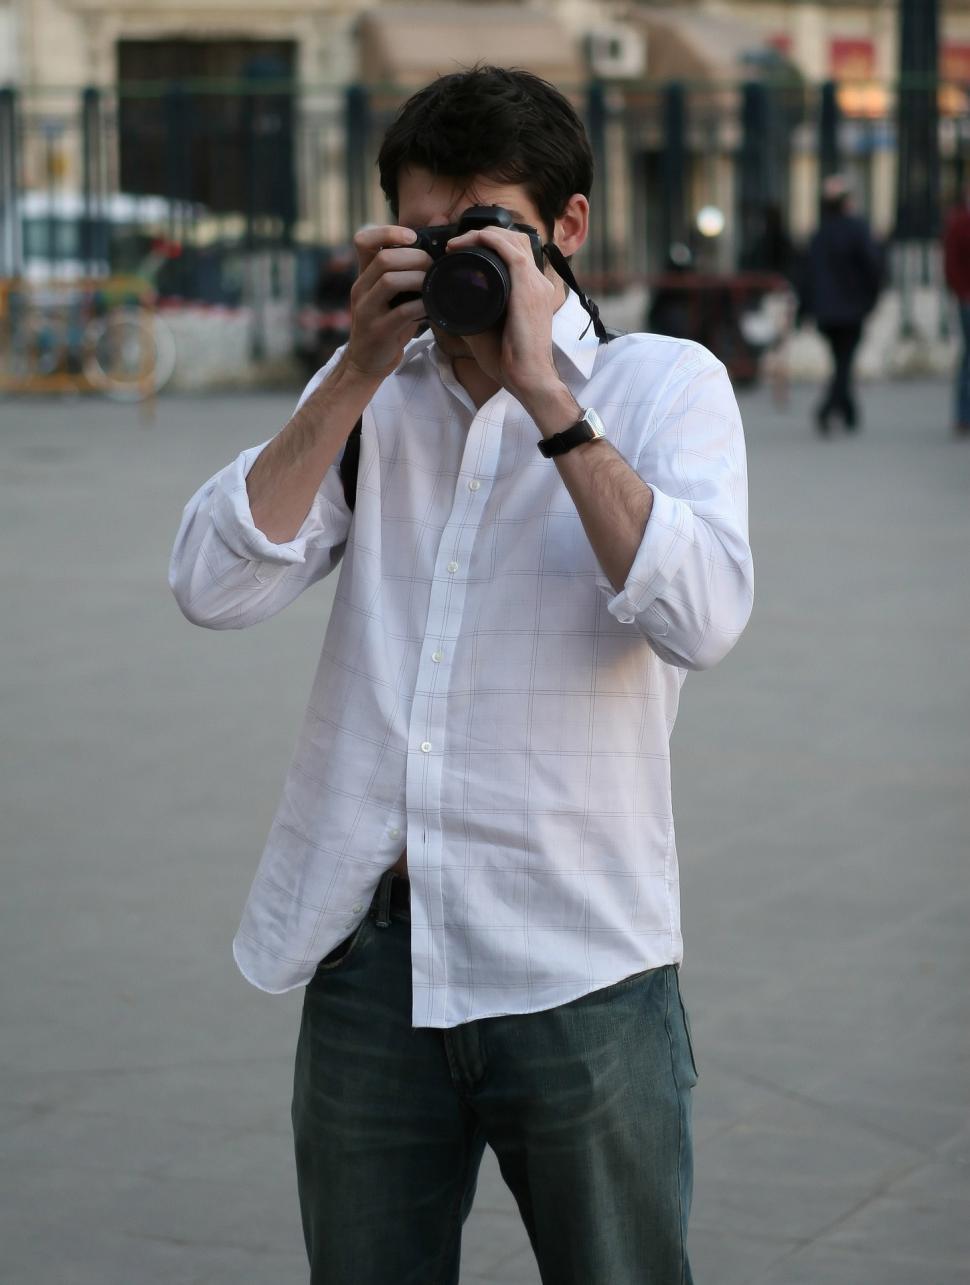 Free Image of Man Taking Selfie With Camera 